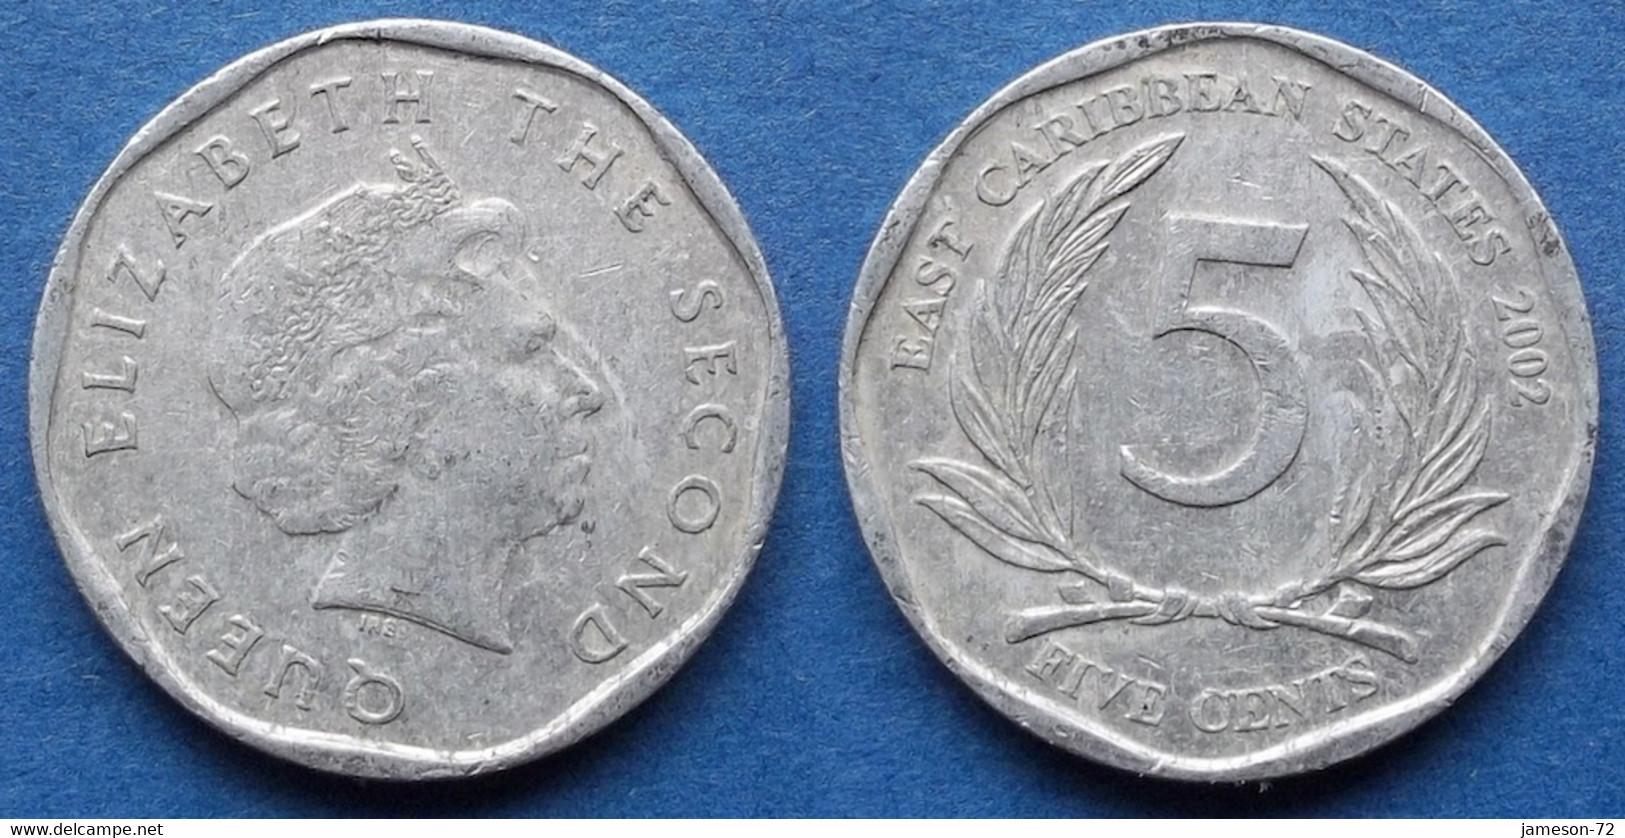 EAST CARIBBEAN STATES - 5 Cents 2002 KM# 36 Elizabeth II - Edelweiss Coins - East Caribbean States